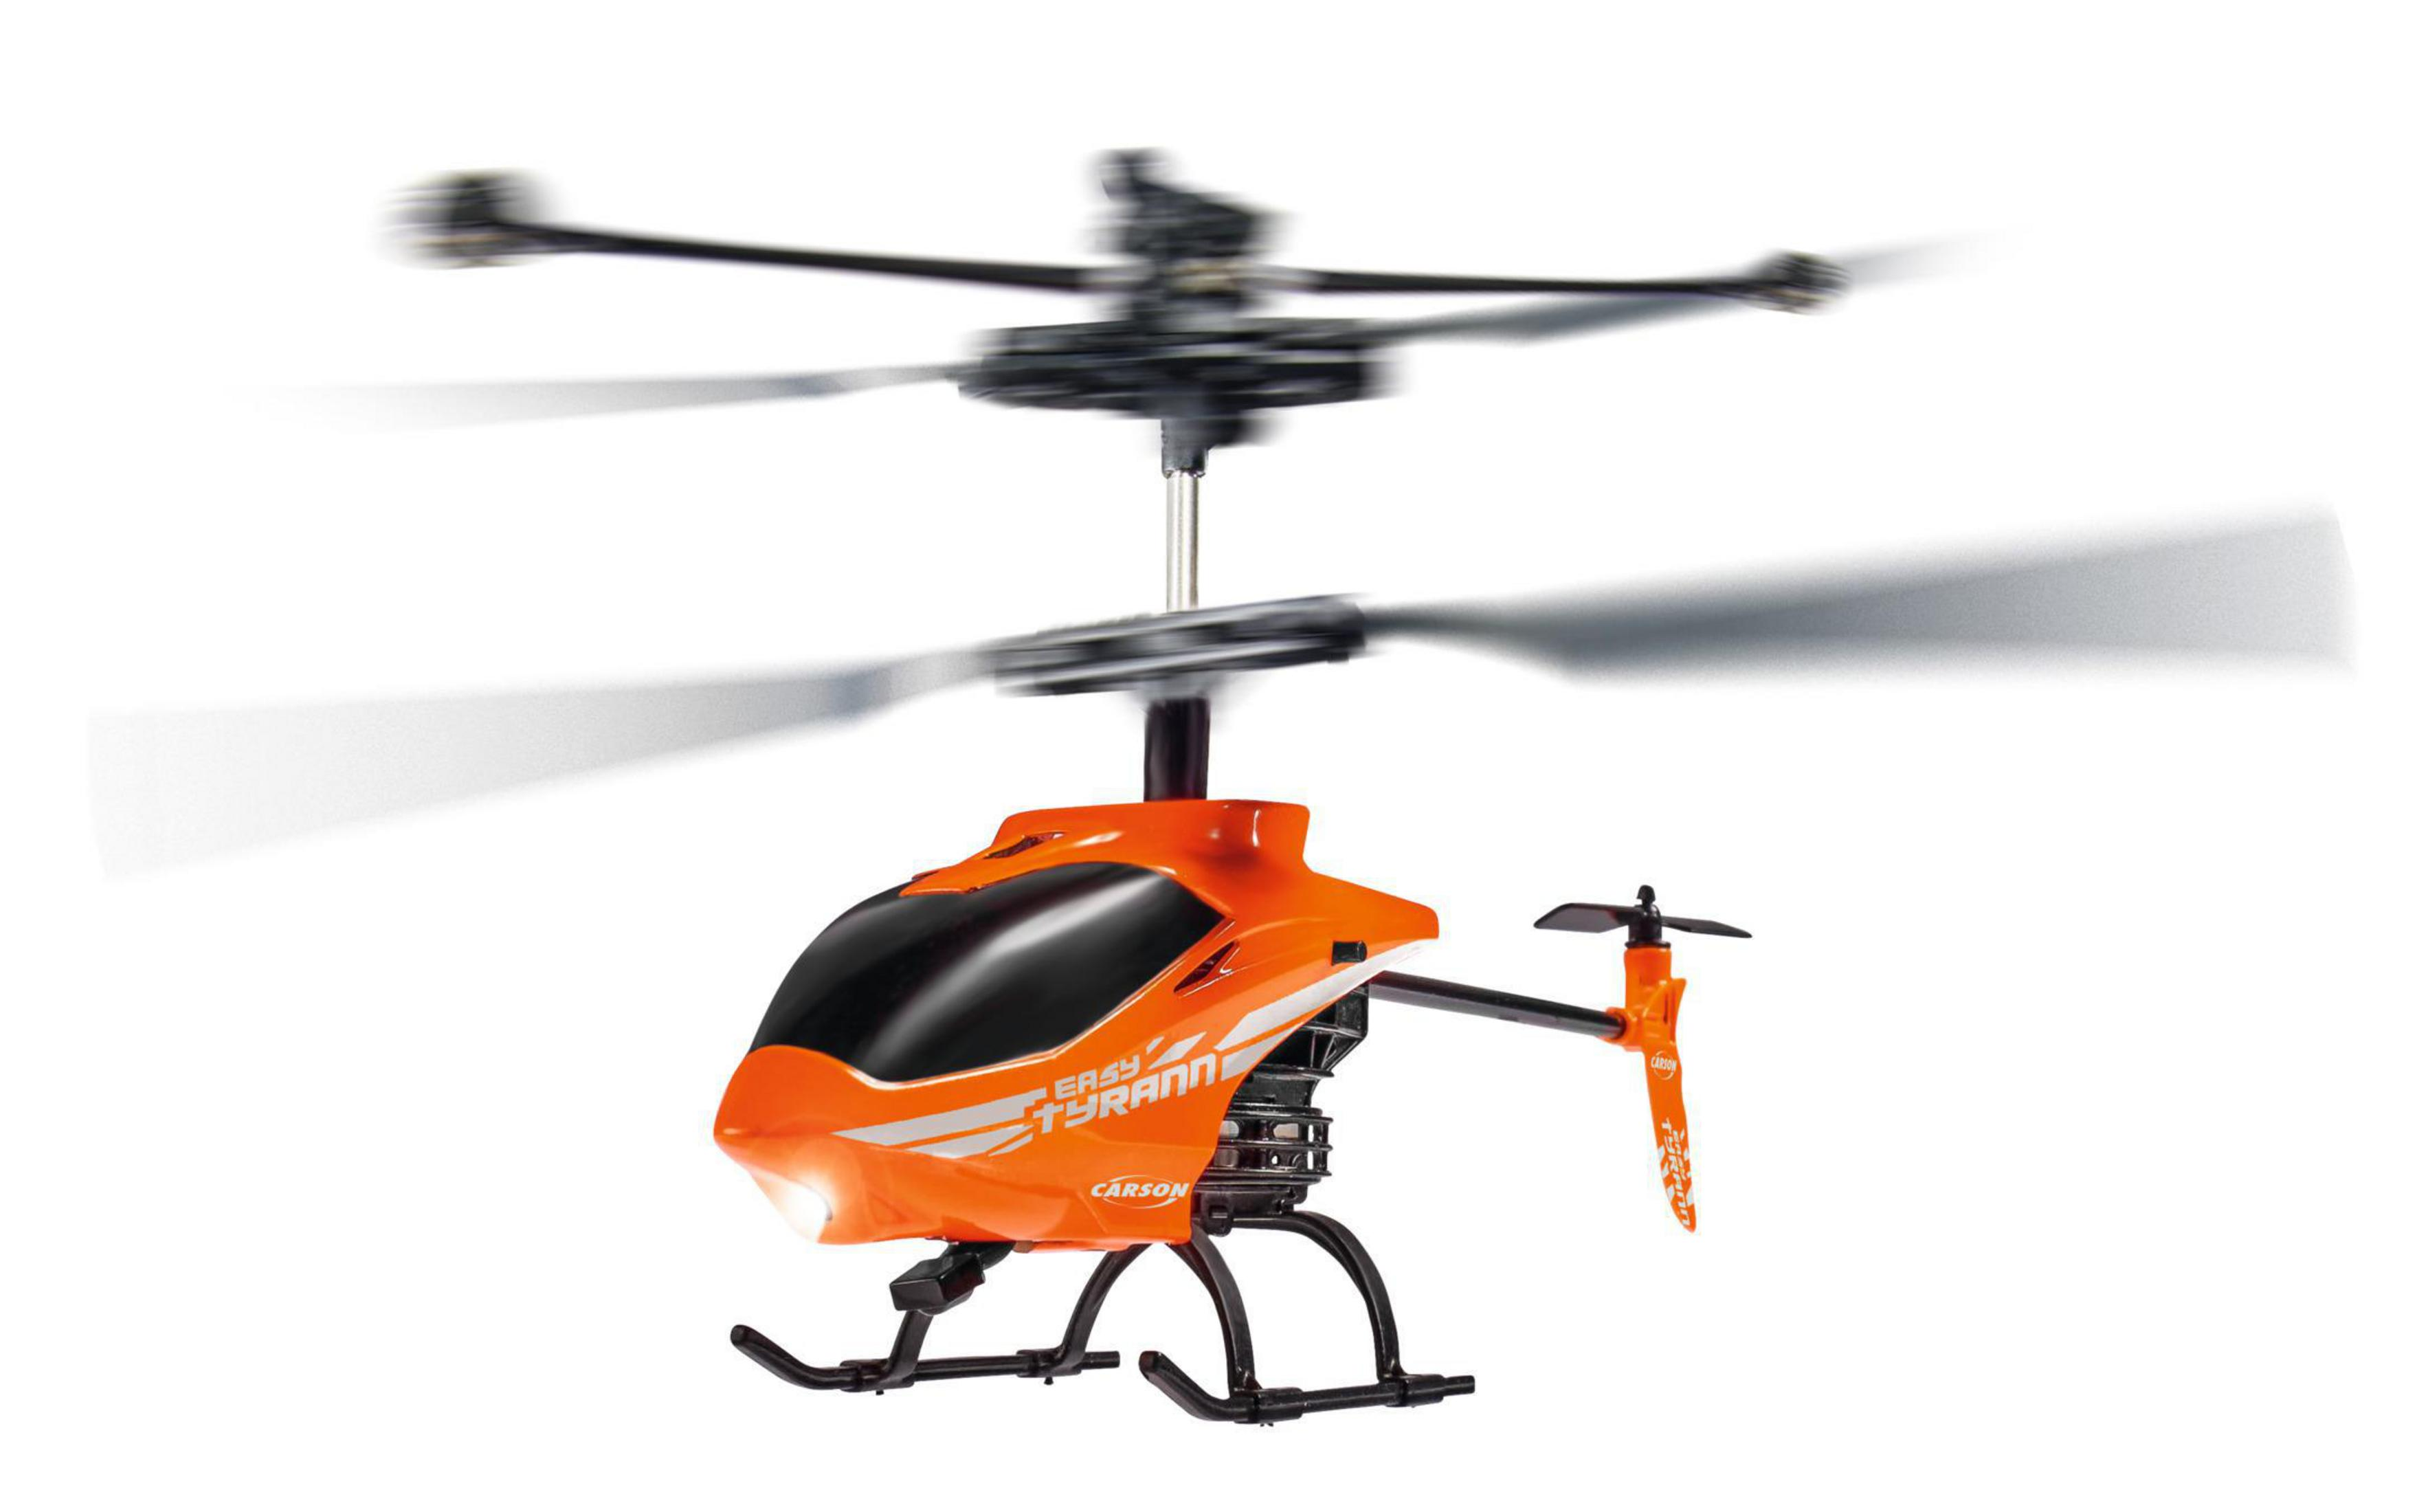 CARSON 500507155 NANO Helikopter, GYRO Orange 230 TYRANN 2CH IR ferngesteuerter